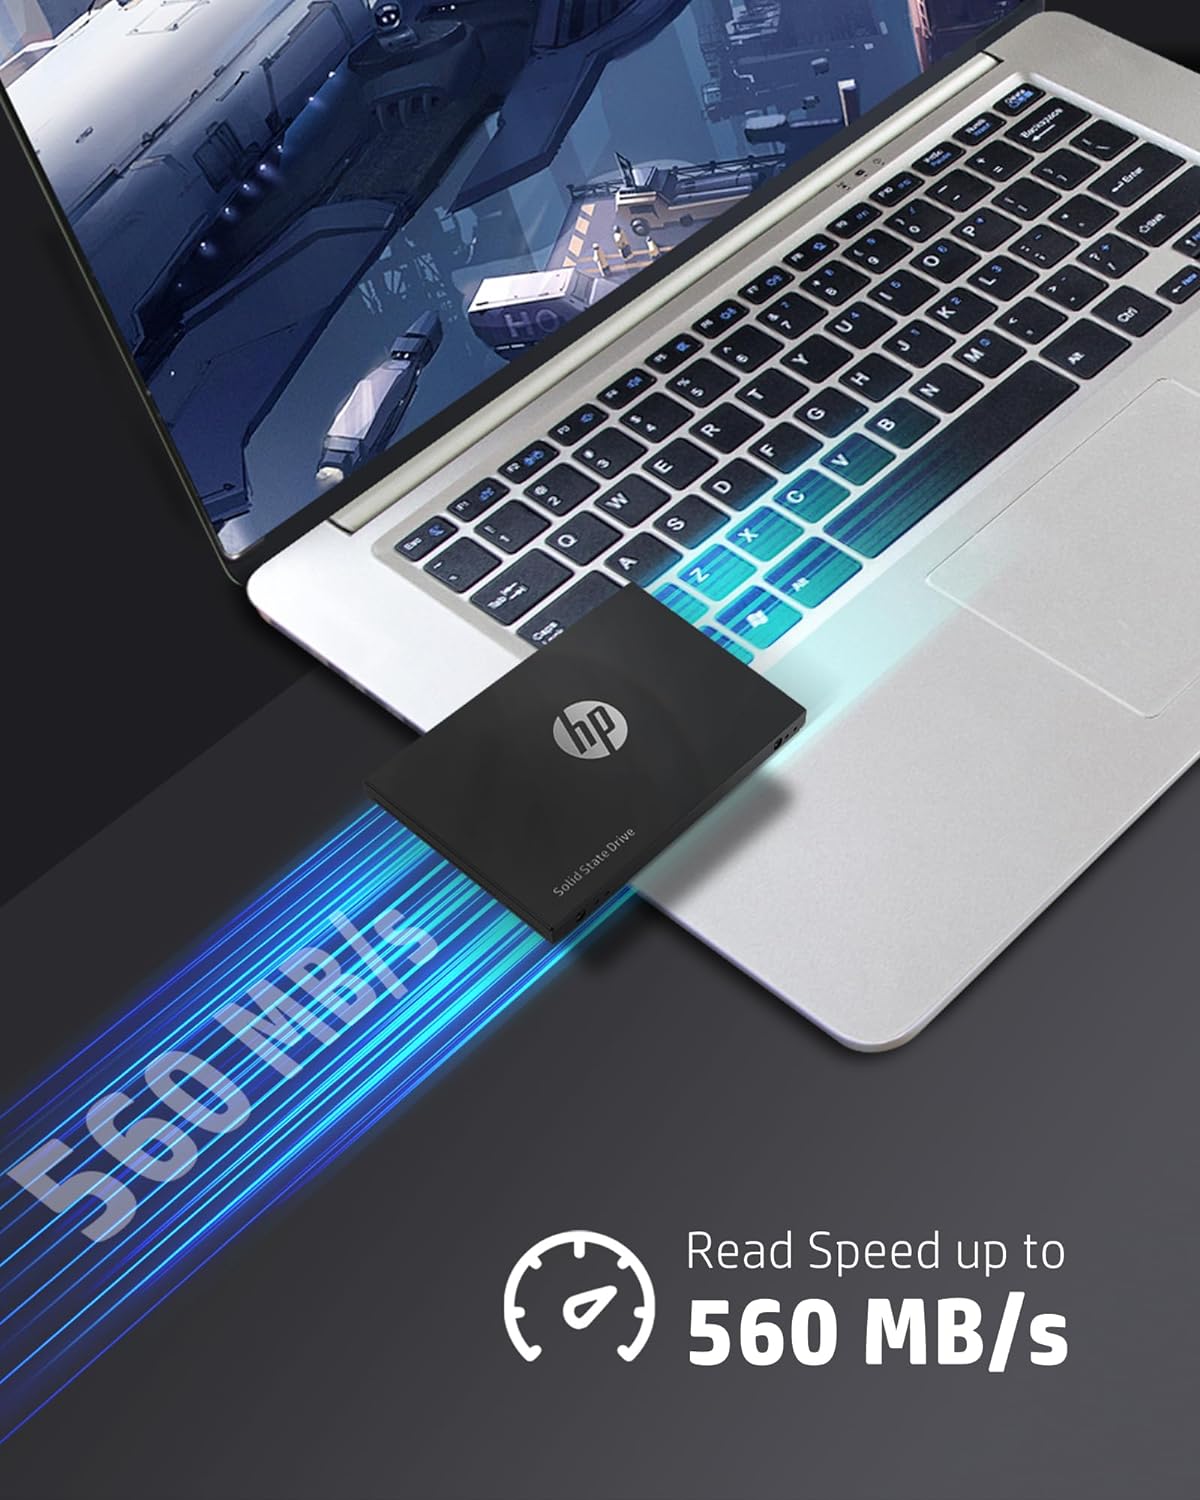 HP S750 3D NAND 256GB Internal PC SSD - SATA III Gb/s, 2.5 Up to 560 MB/s